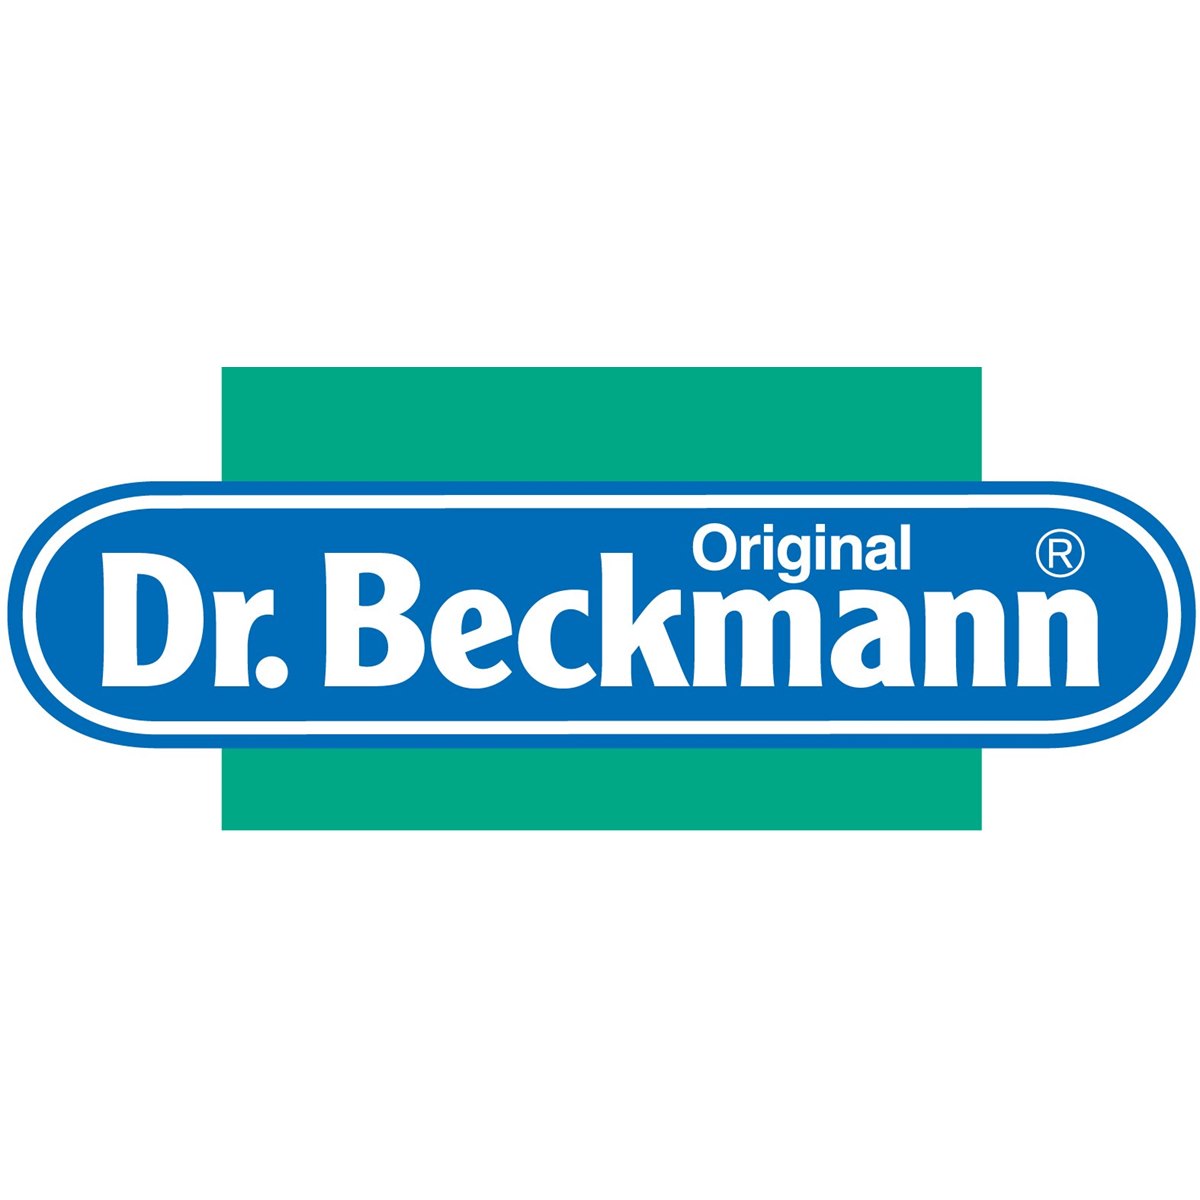 Where to Buy Dr Beckmann Spray Starch